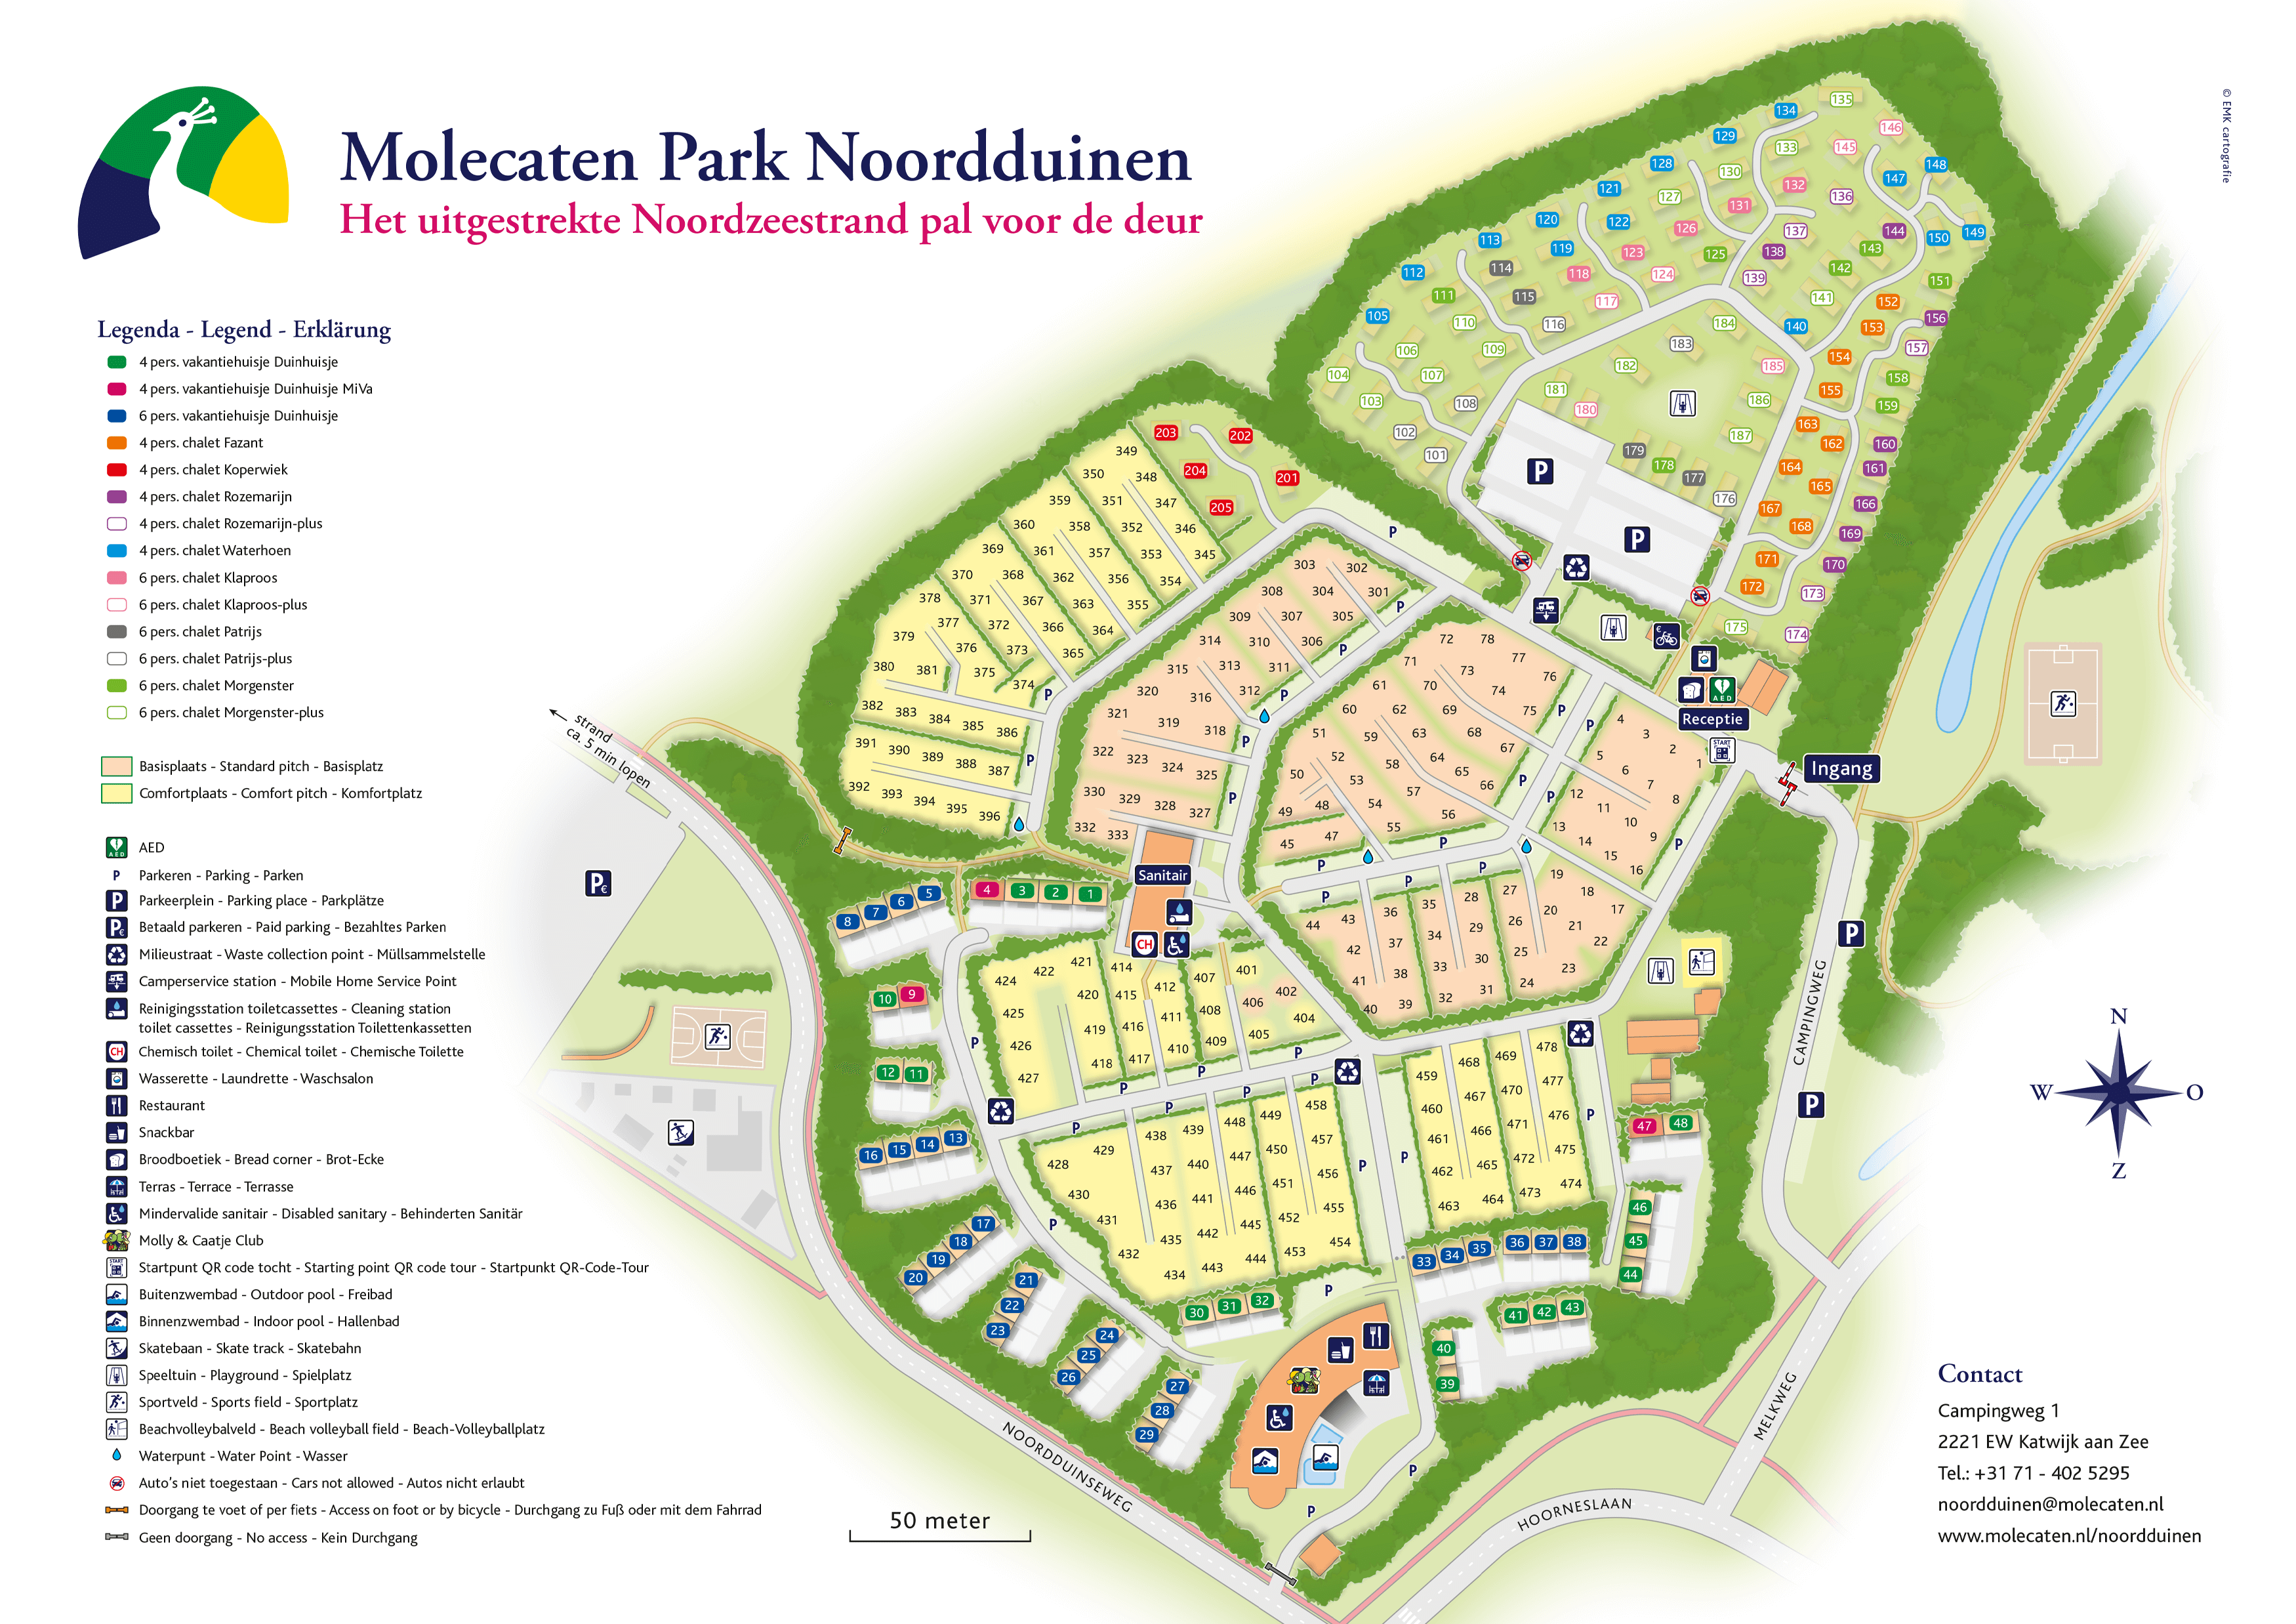 Molecaten Park Noordduinen accommodation.parkmap.alttext